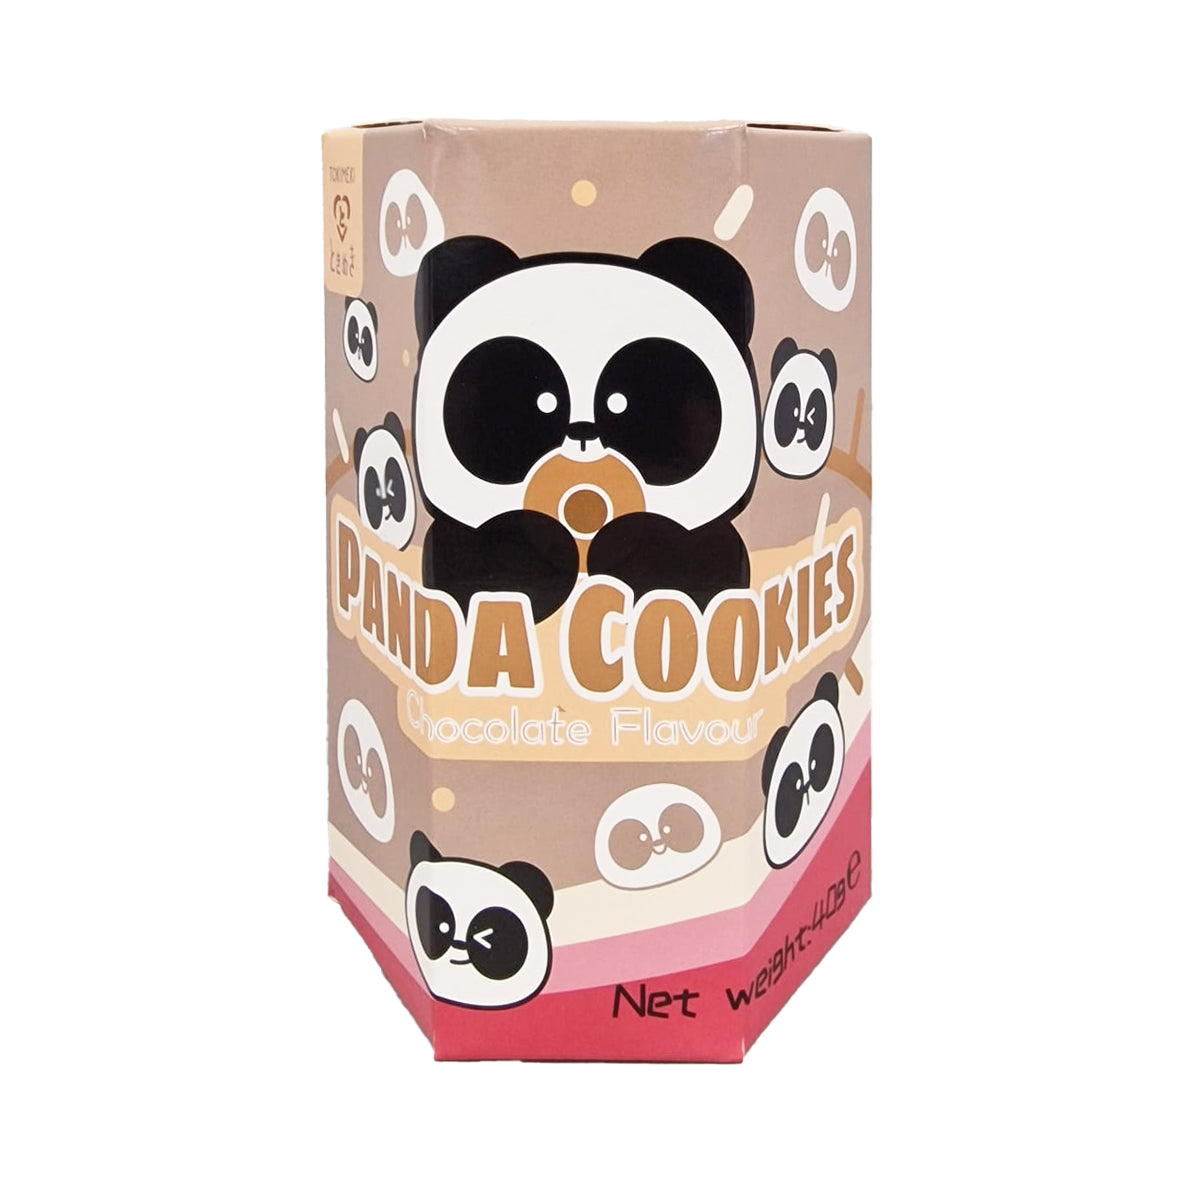 Panda Cookies - Chocolate Flavour